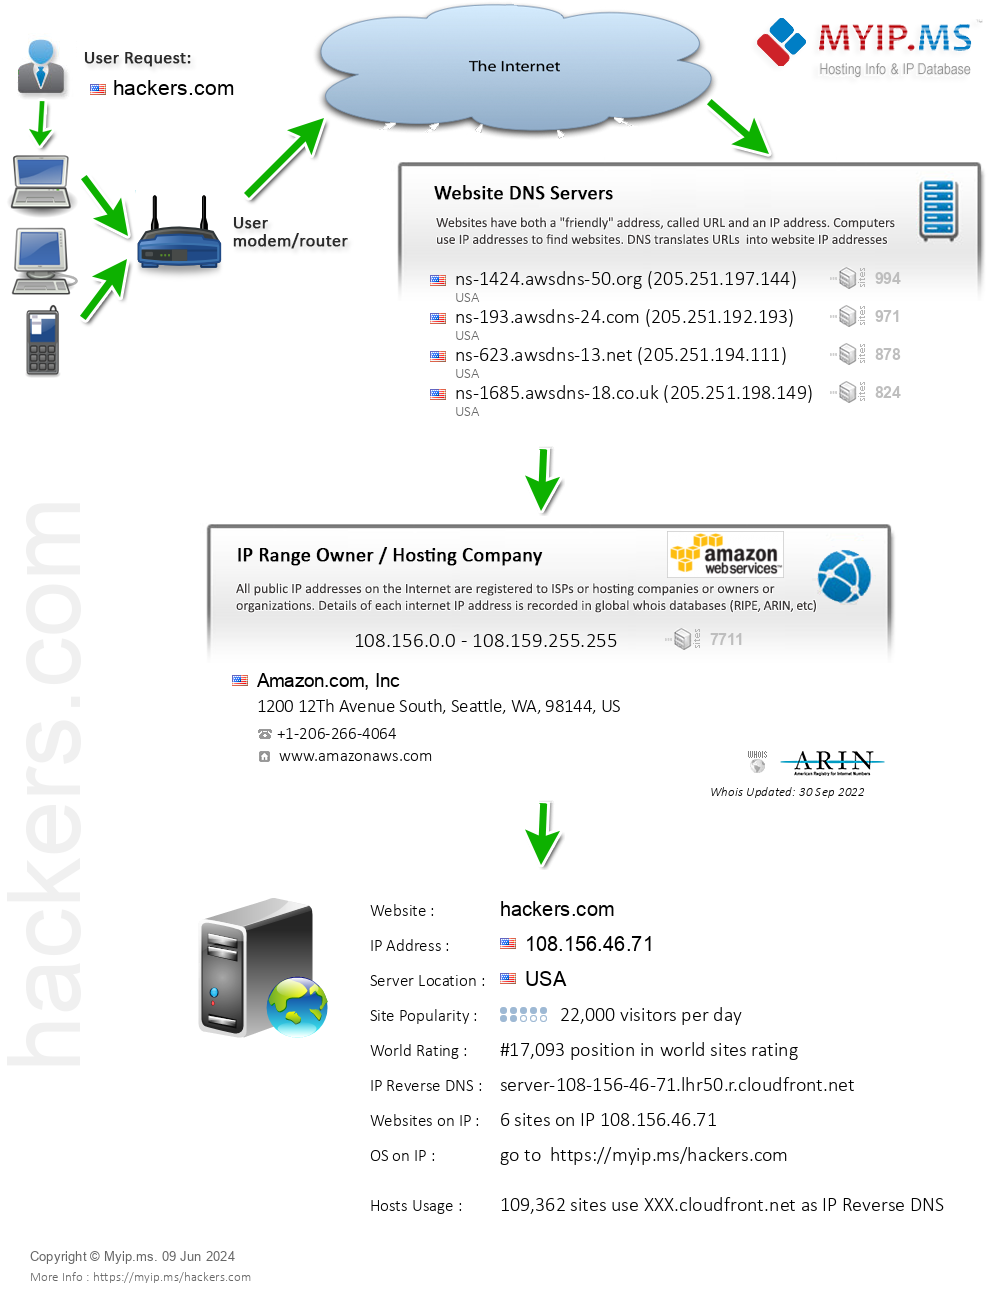 Hackers.com - Website Hosting Visual IP Diagram